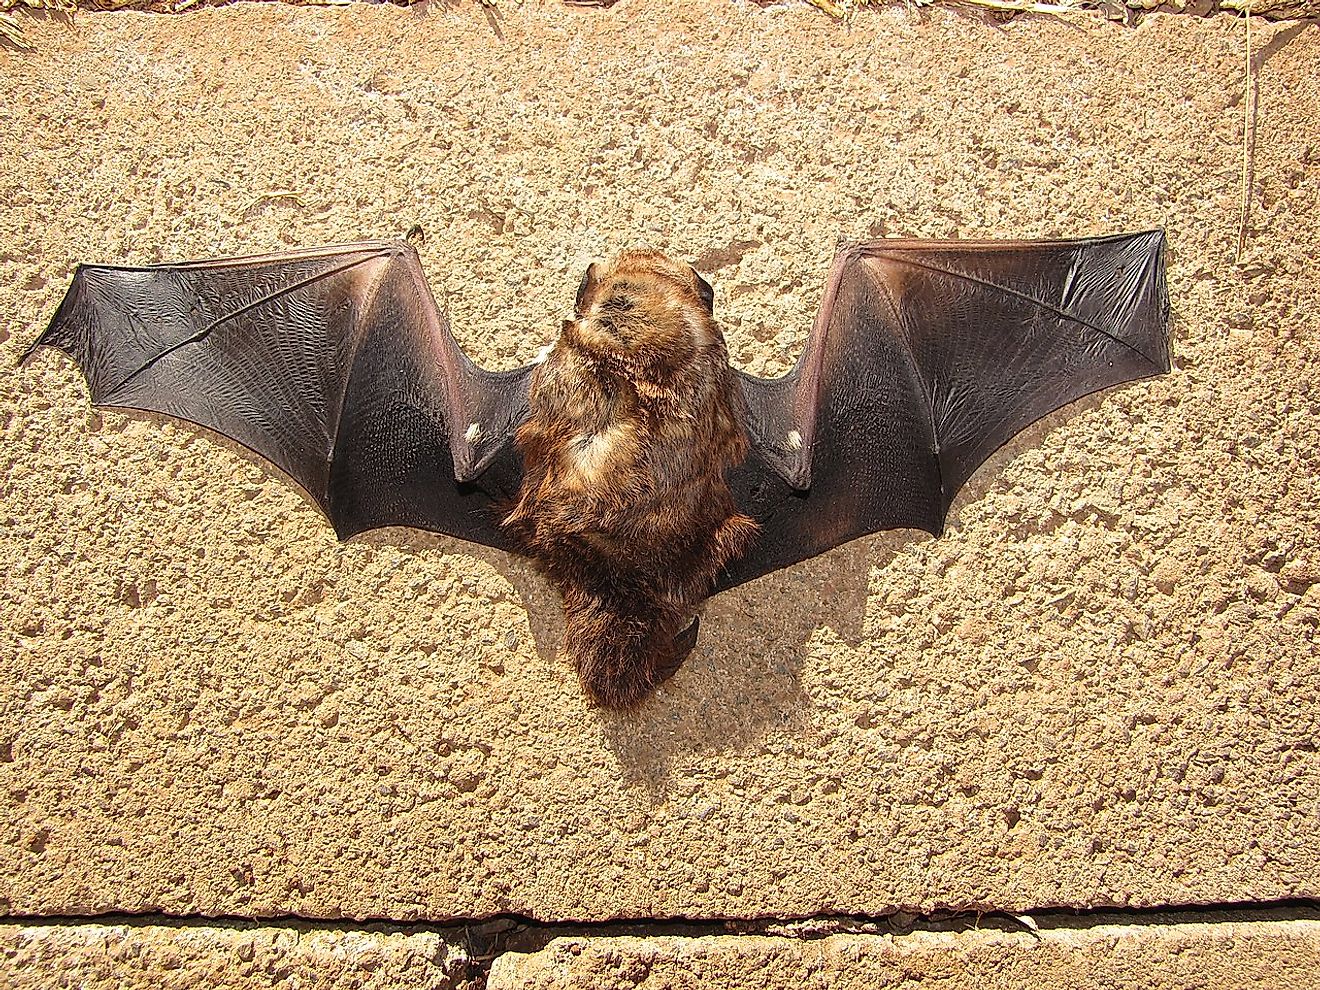 Hawaiian hoary bat. Image credit: Forest and Kim Starr/Wikimedia.org